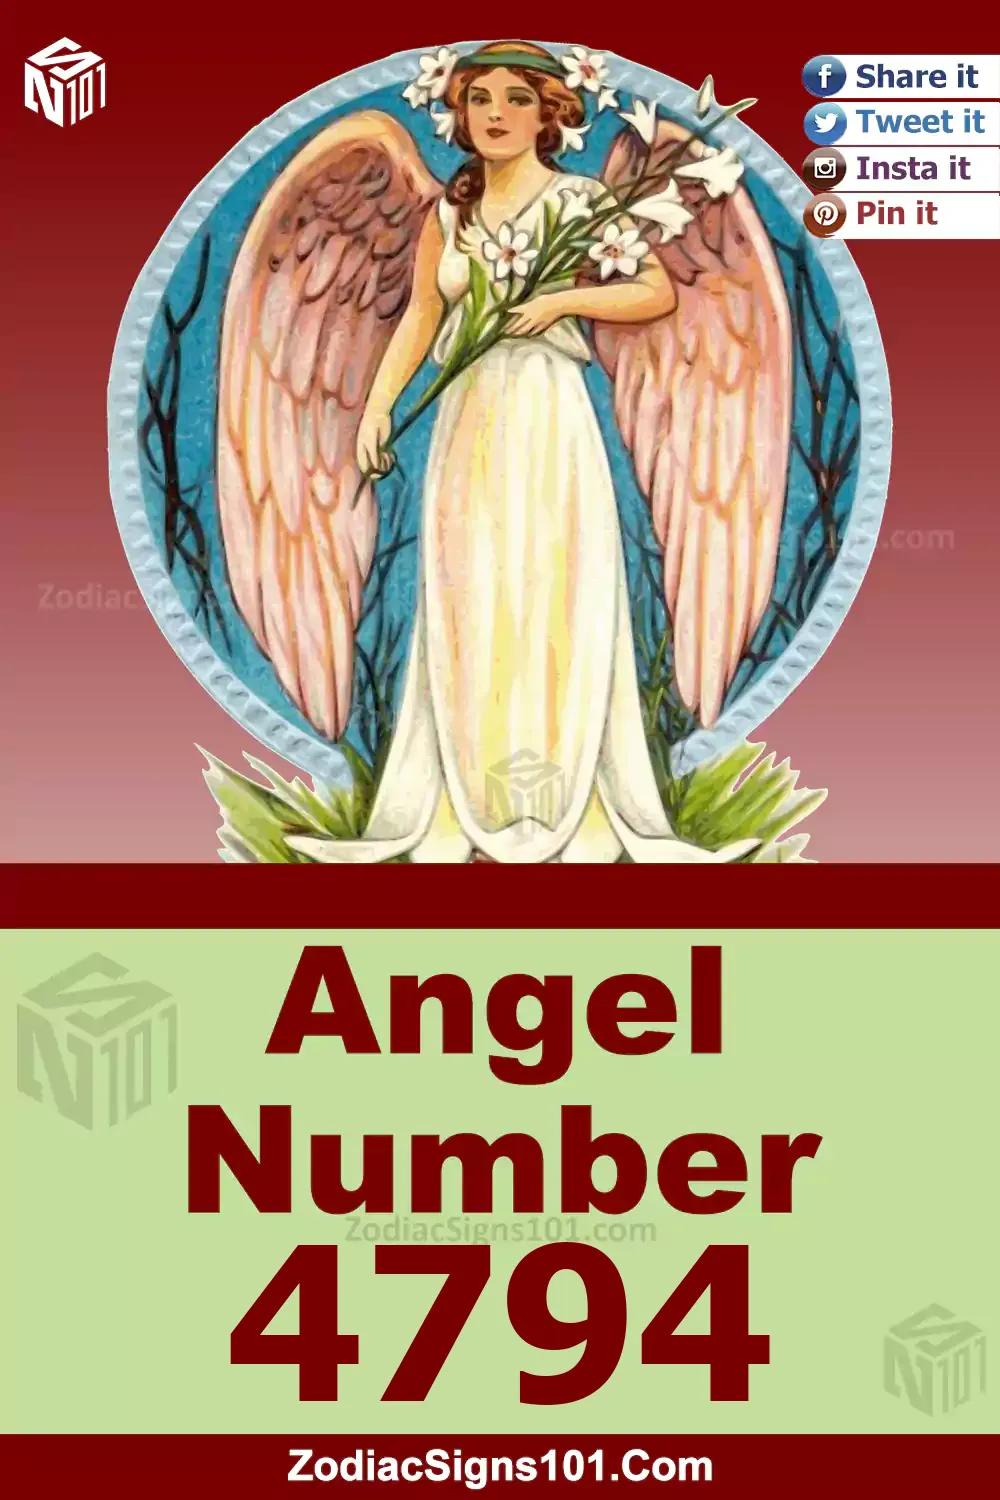 4794-Angel-Number-Meaning.jpg